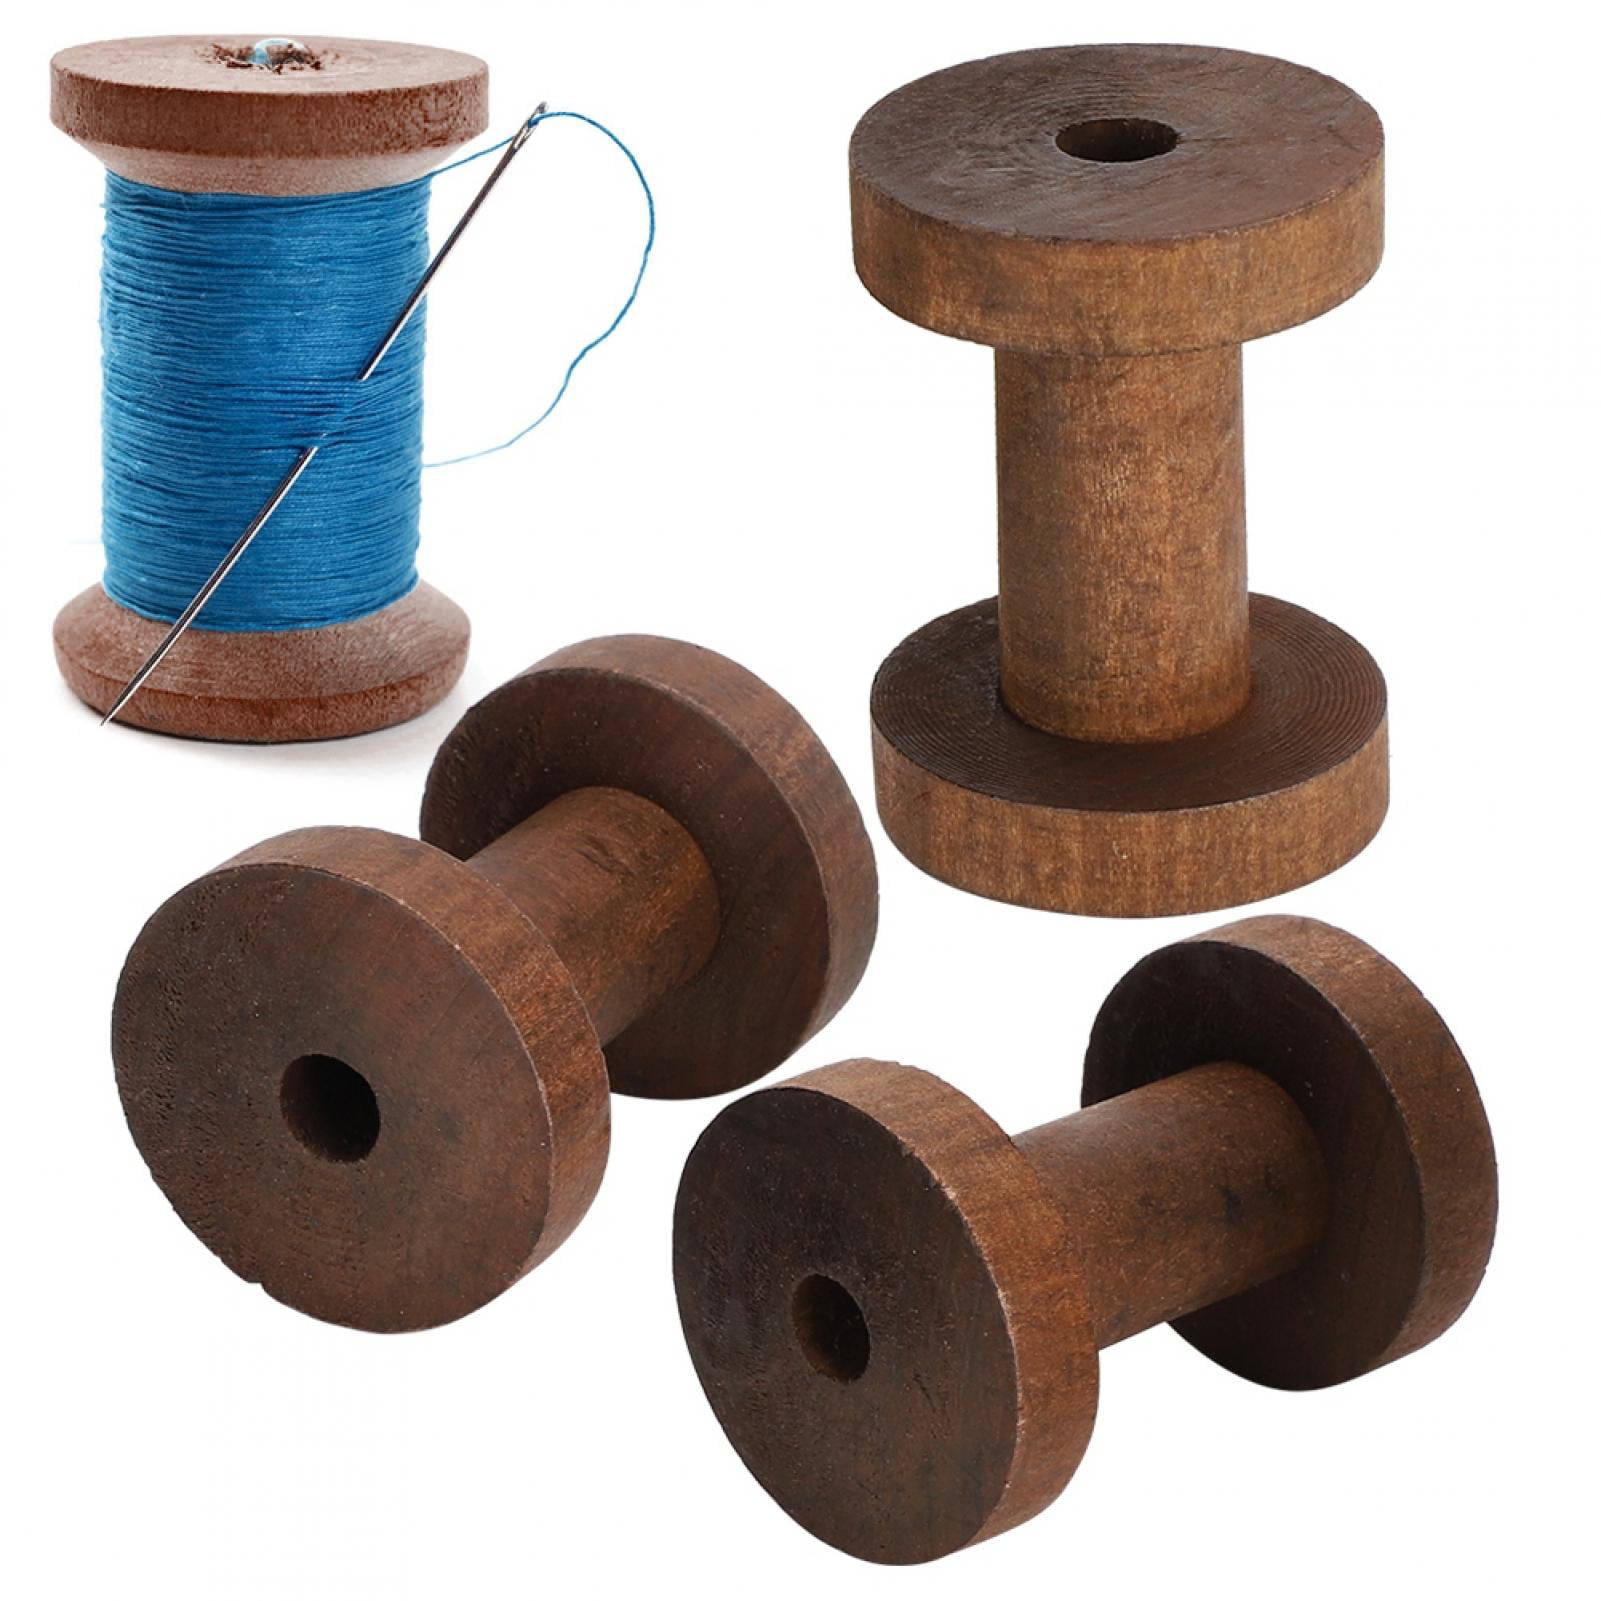 3 Pcs Wooden Spools Reels Dark Brown Thread Bobbins Coil Sewing Threading Tools 